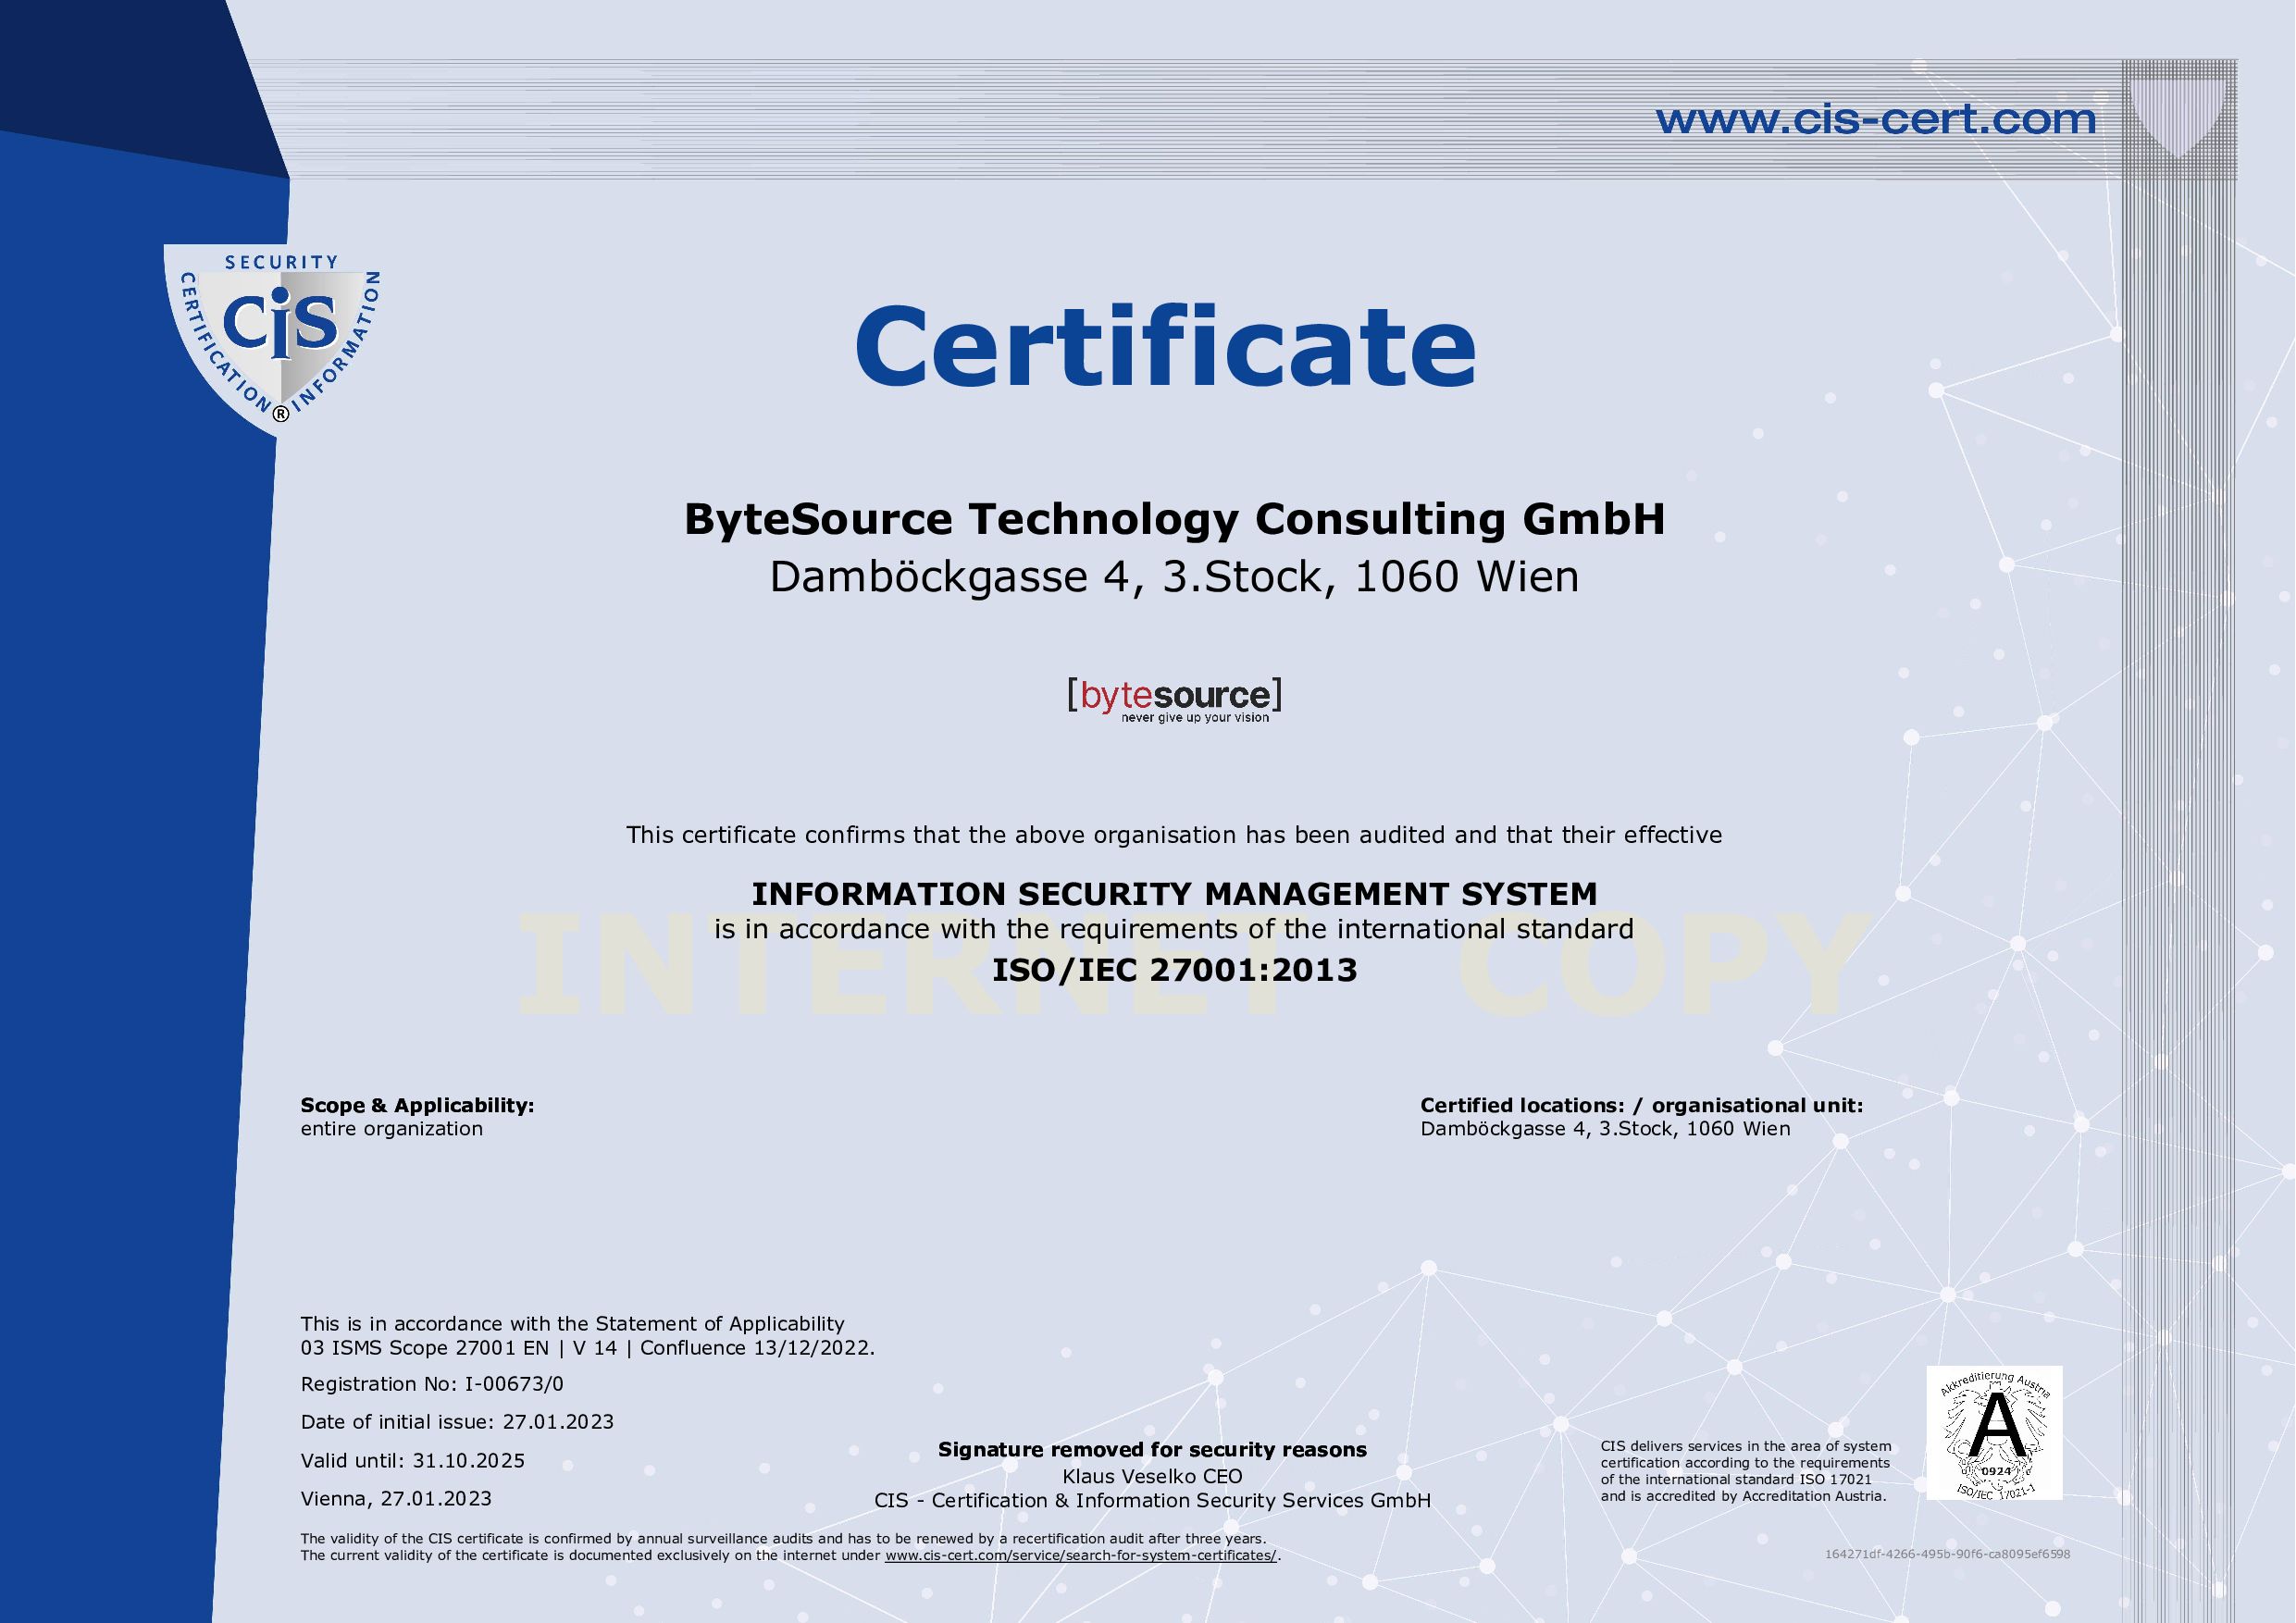 iso27001_bytesource_certificate.jpg